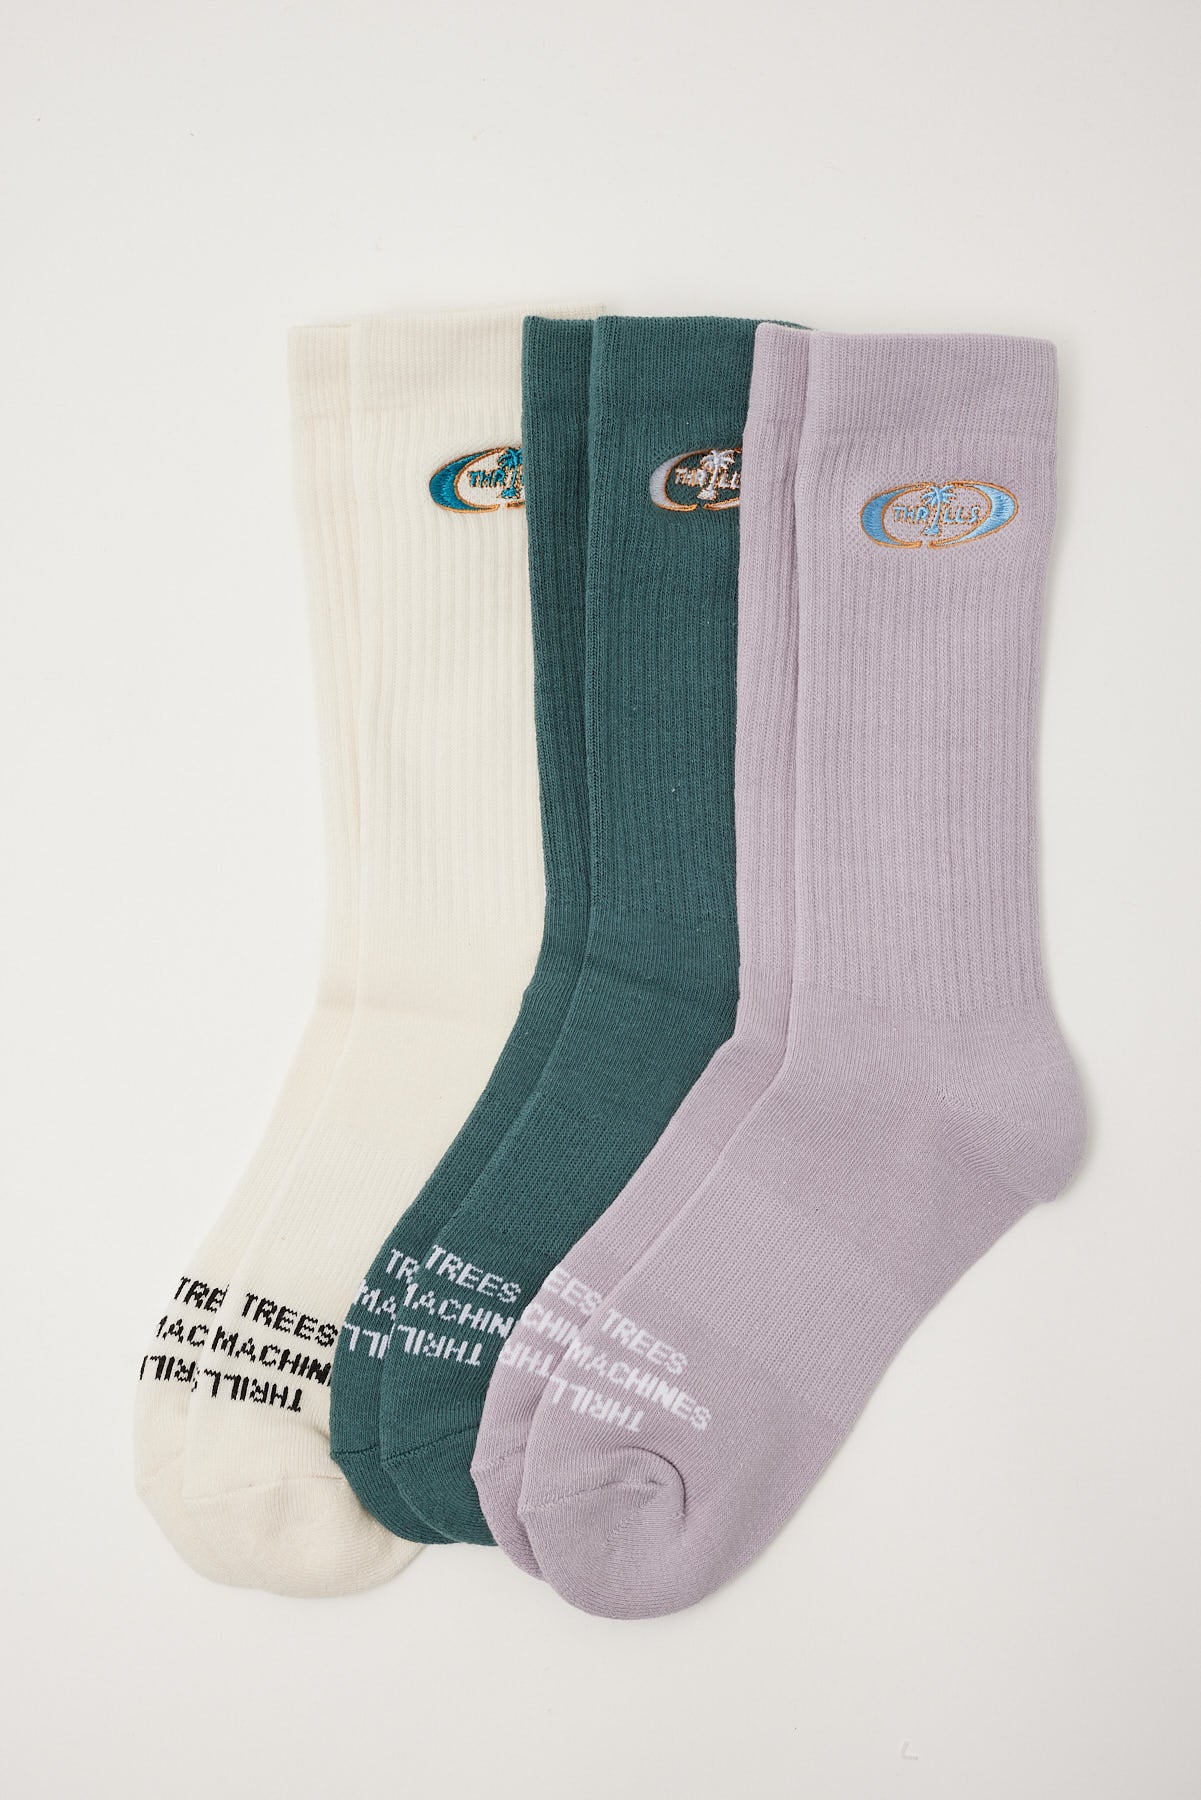 Thrills Alloy 3 Pack Socks Heritage White/Vintage Teal/Lilac